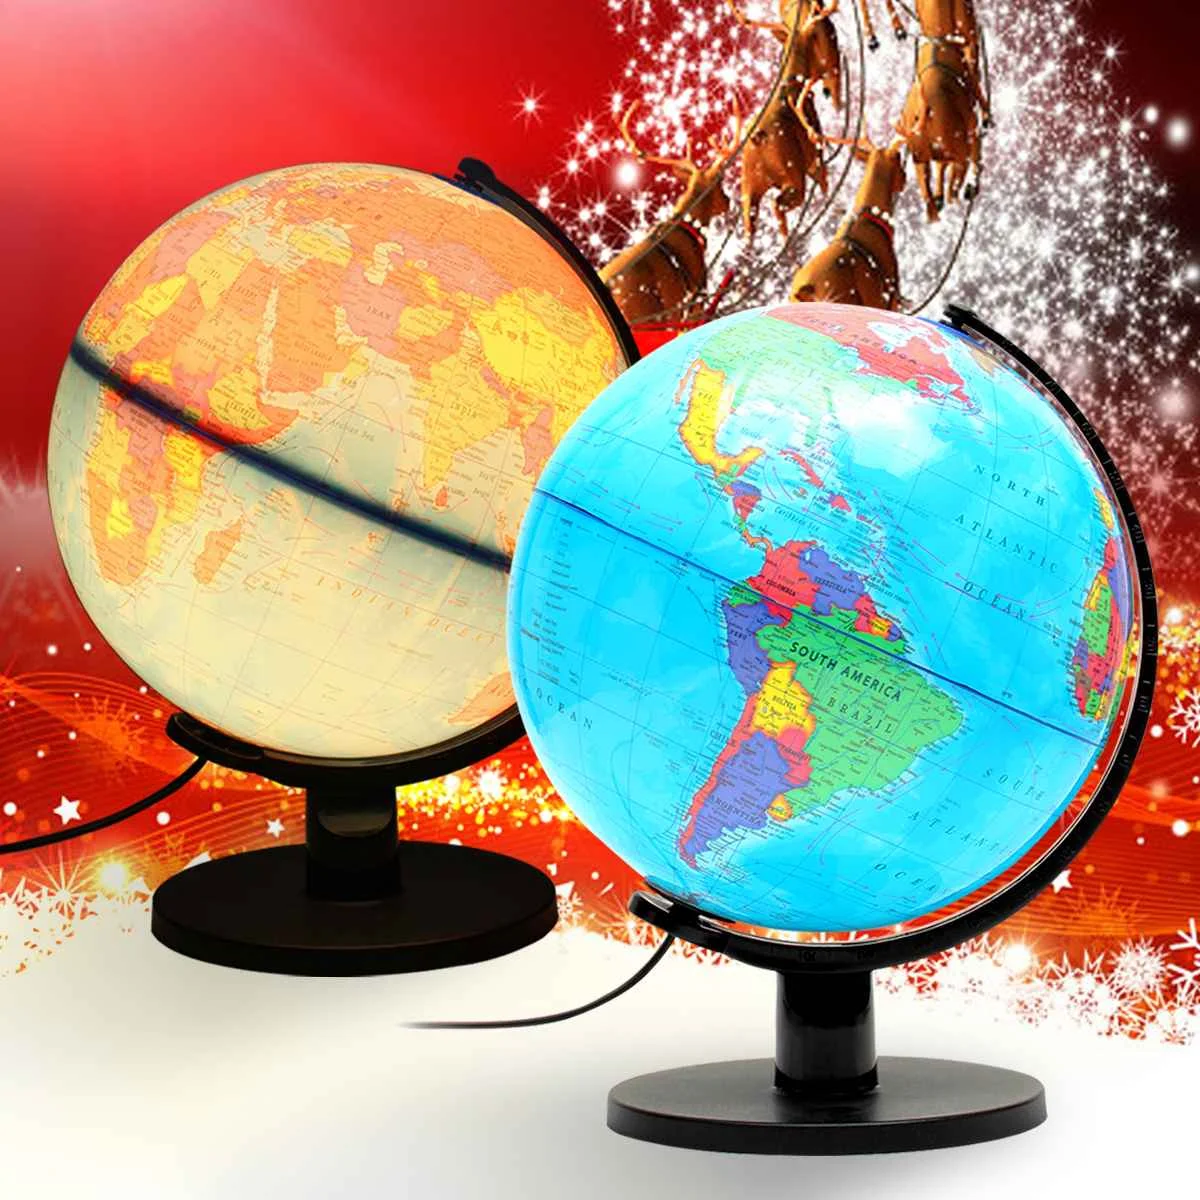 25cm Light Up World Globe Educational Illuminated Sturdy Political Boundaries 